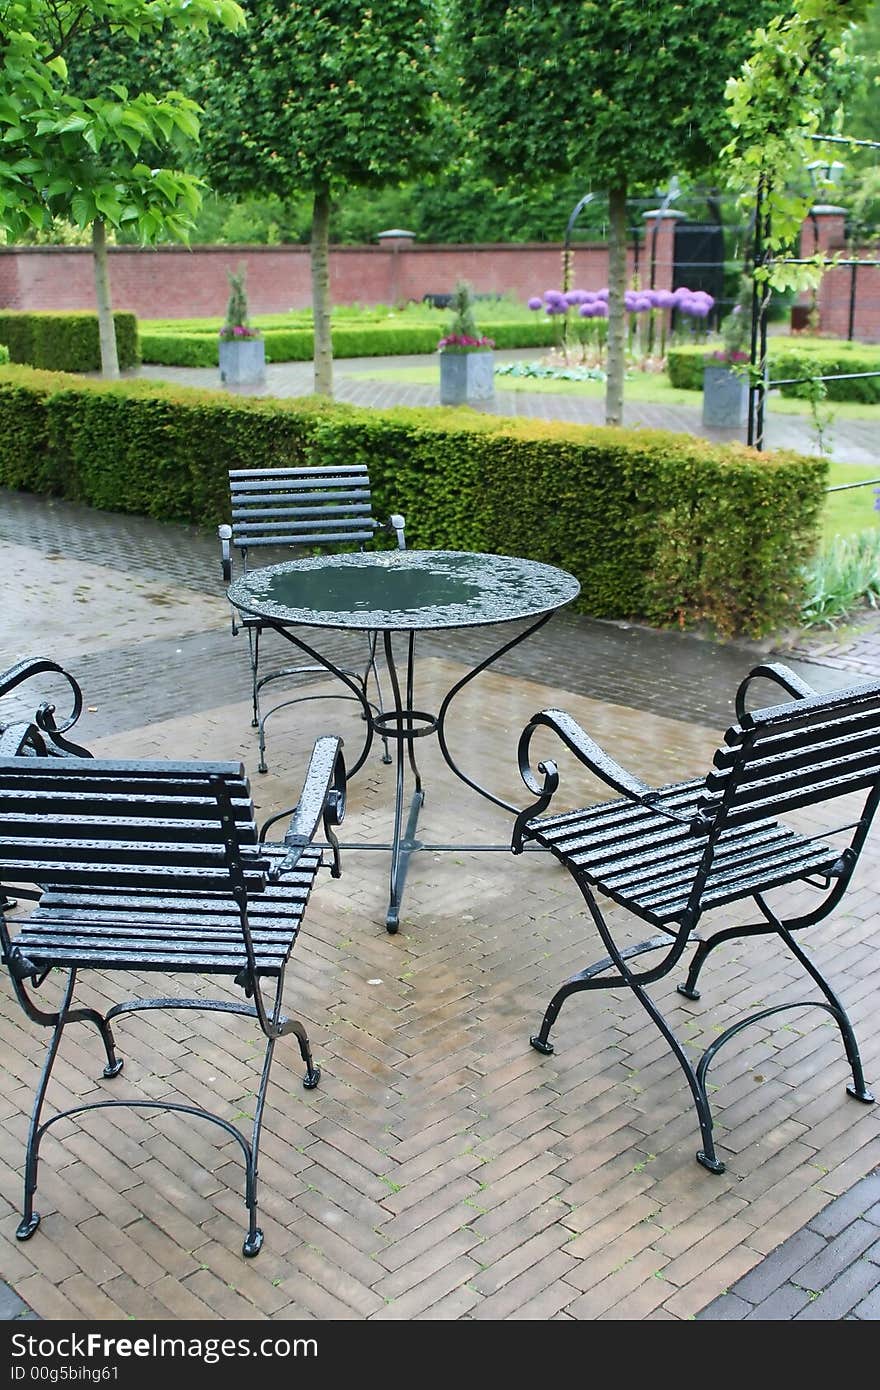 Wet furniture in park cafe after rain. Wet furniture in park cafe after rain